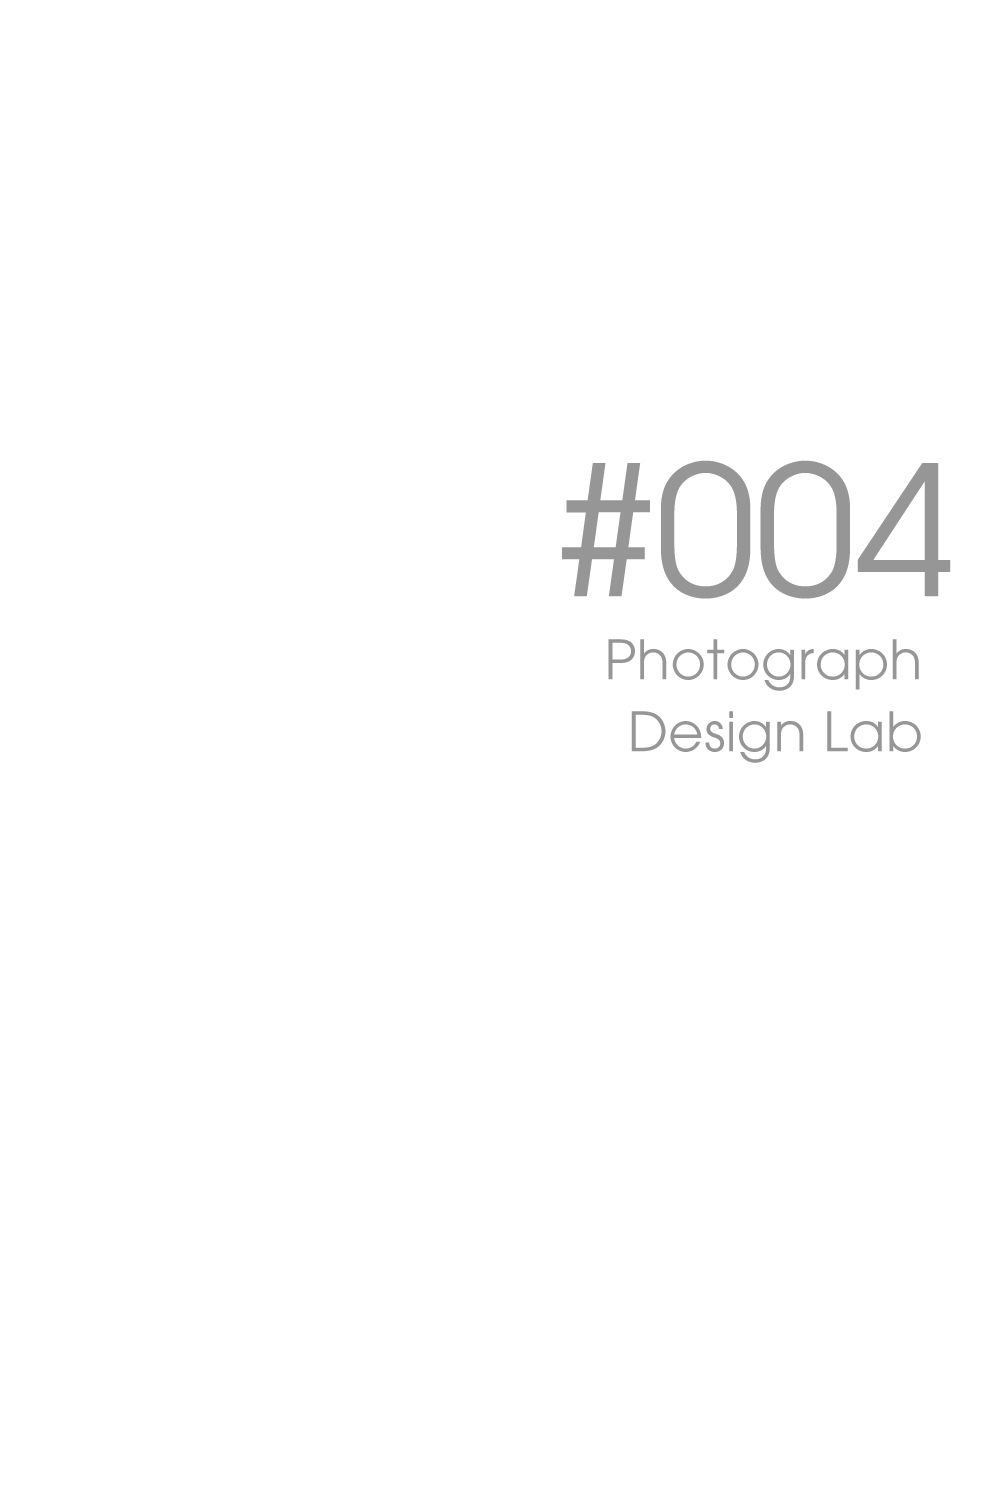 Photograph_DesignLab